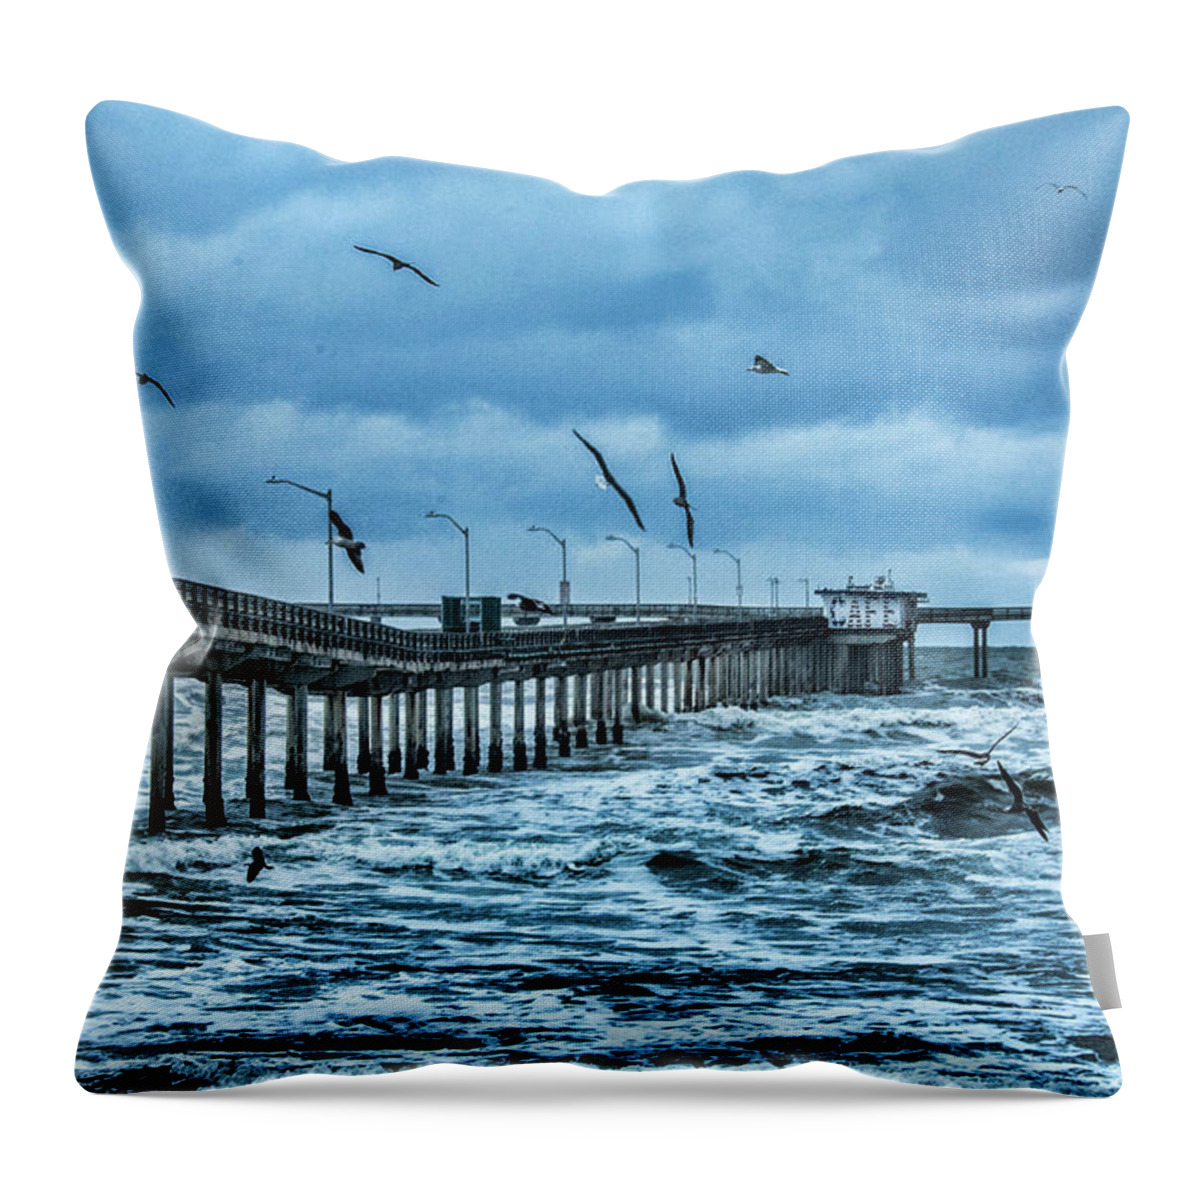 Ocean Beach Fishing Pier Throw Pillow featuring the digital art Ocean Beach Fishing Pier by Daniel Hebard